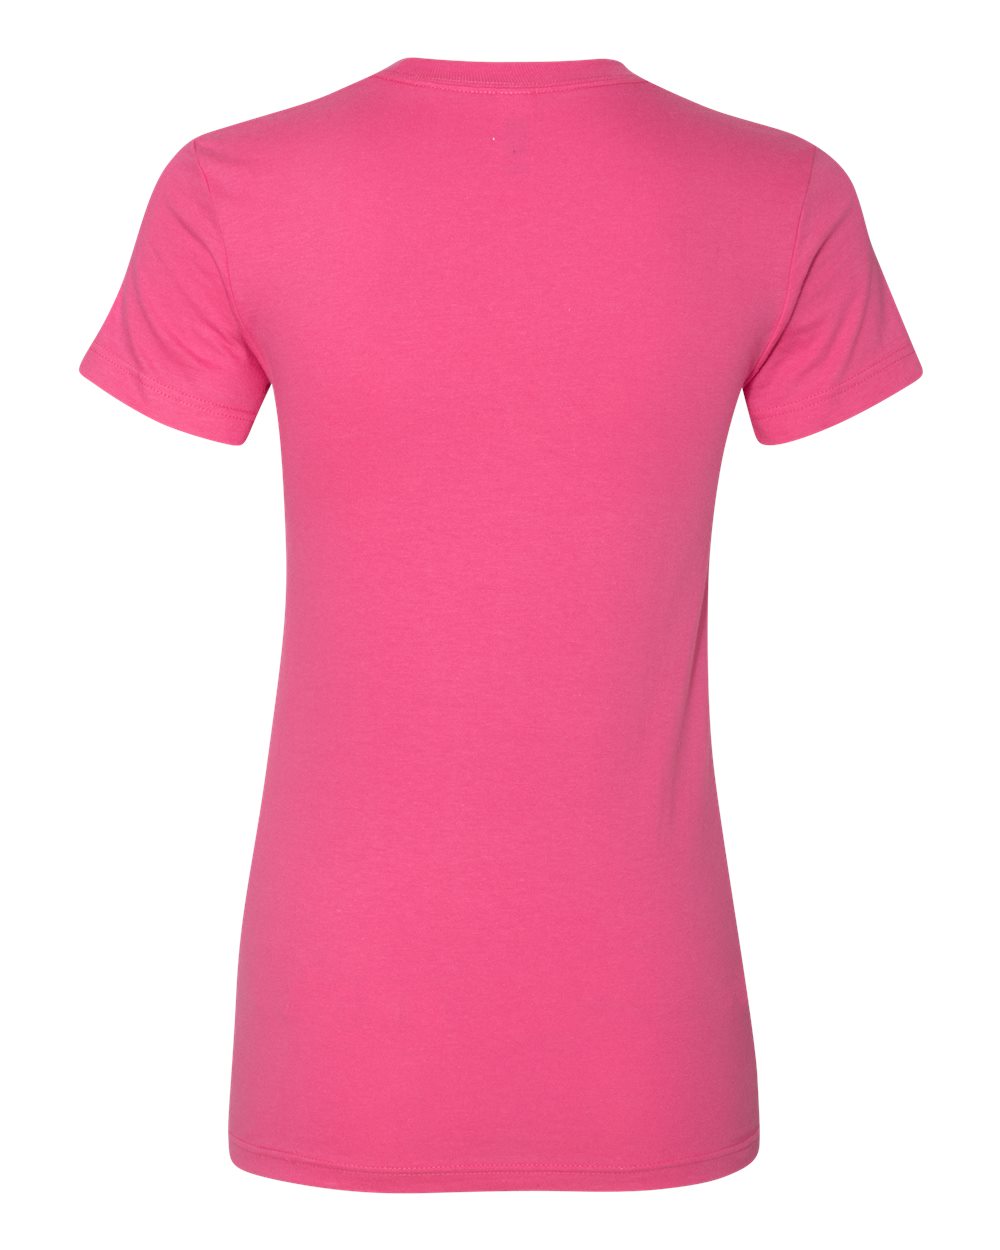 American Apparel Women’s Fine Jersey Tee T Shirt Top Blank 2102W up to ...